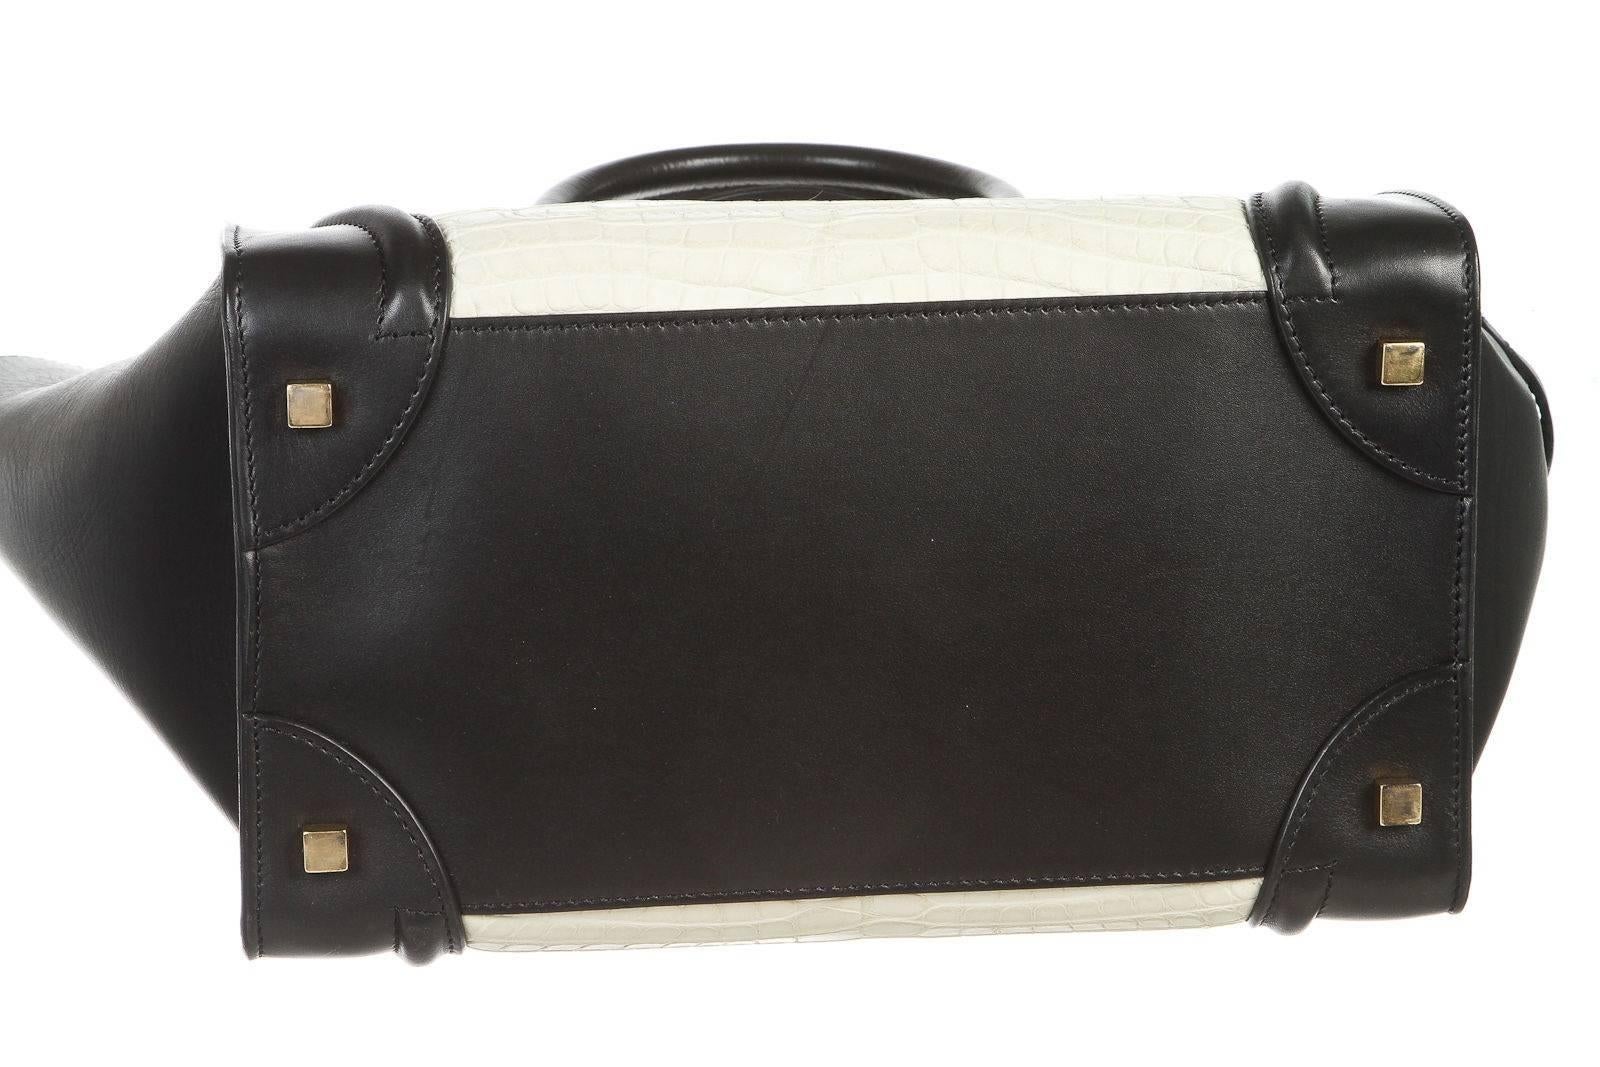 Celine Black Leather and White Crocodile Medium Luggage Tote Handbag For Sale 1